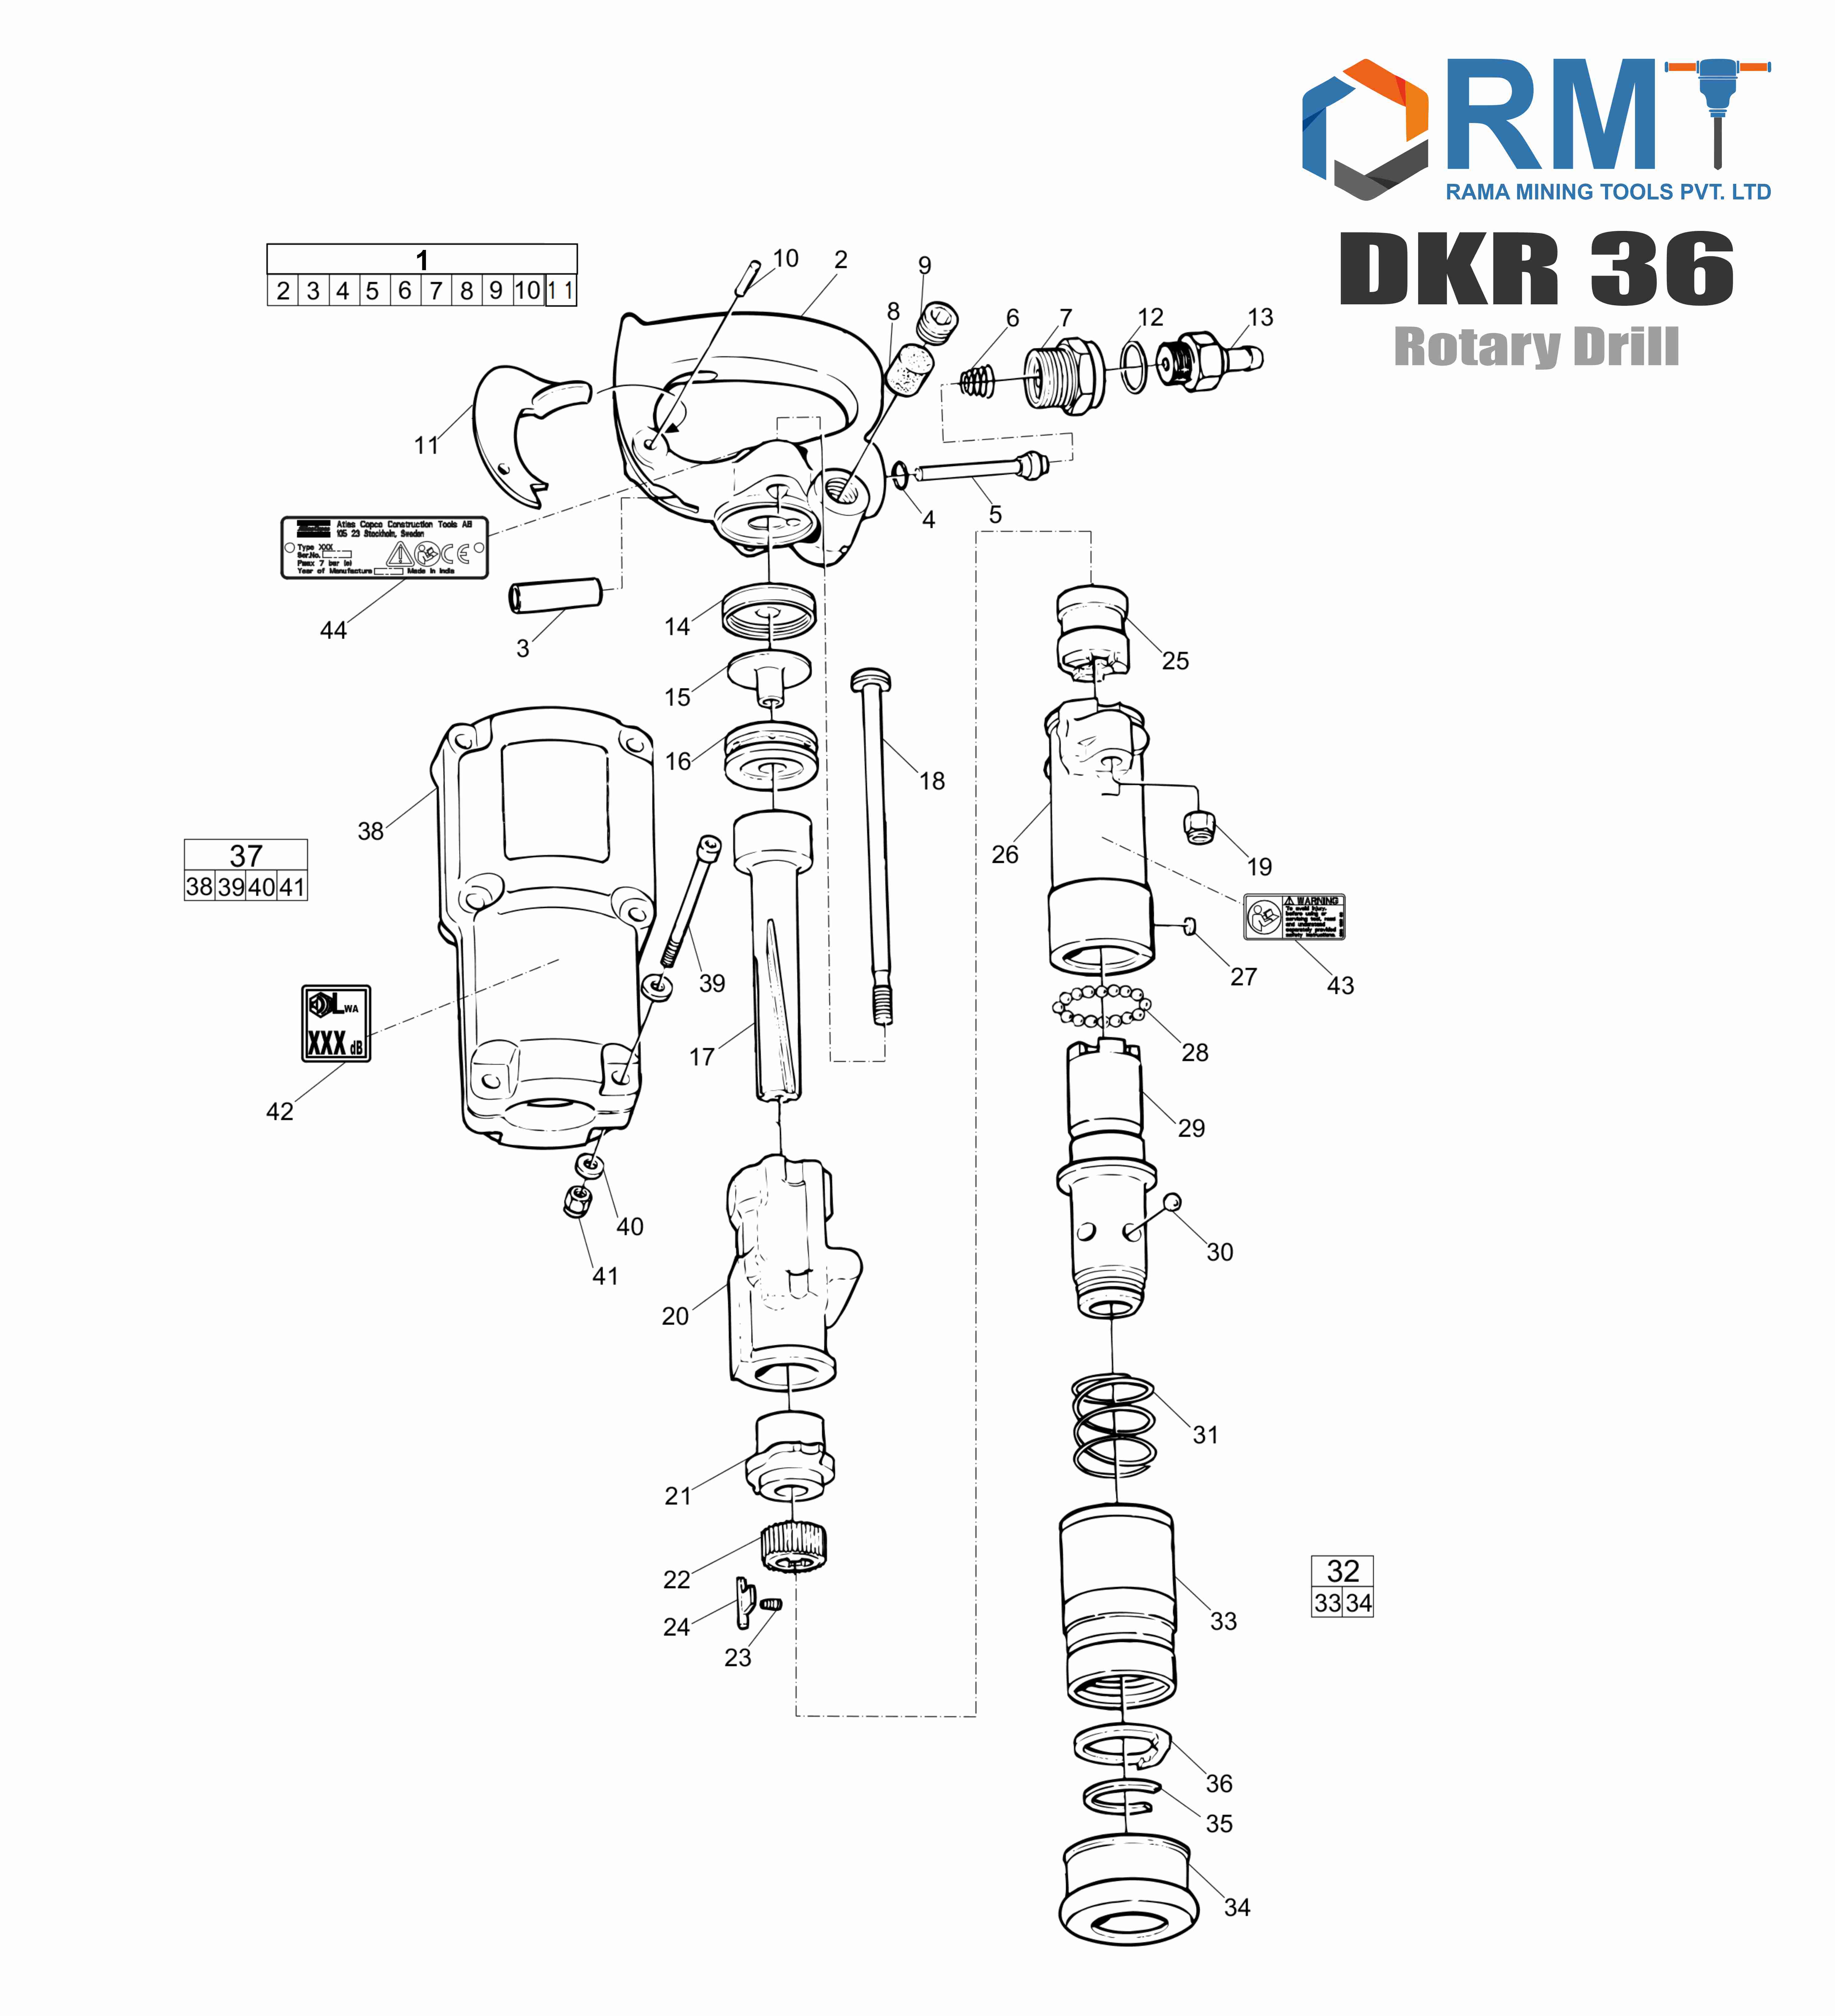 DKR 36 Combi drill